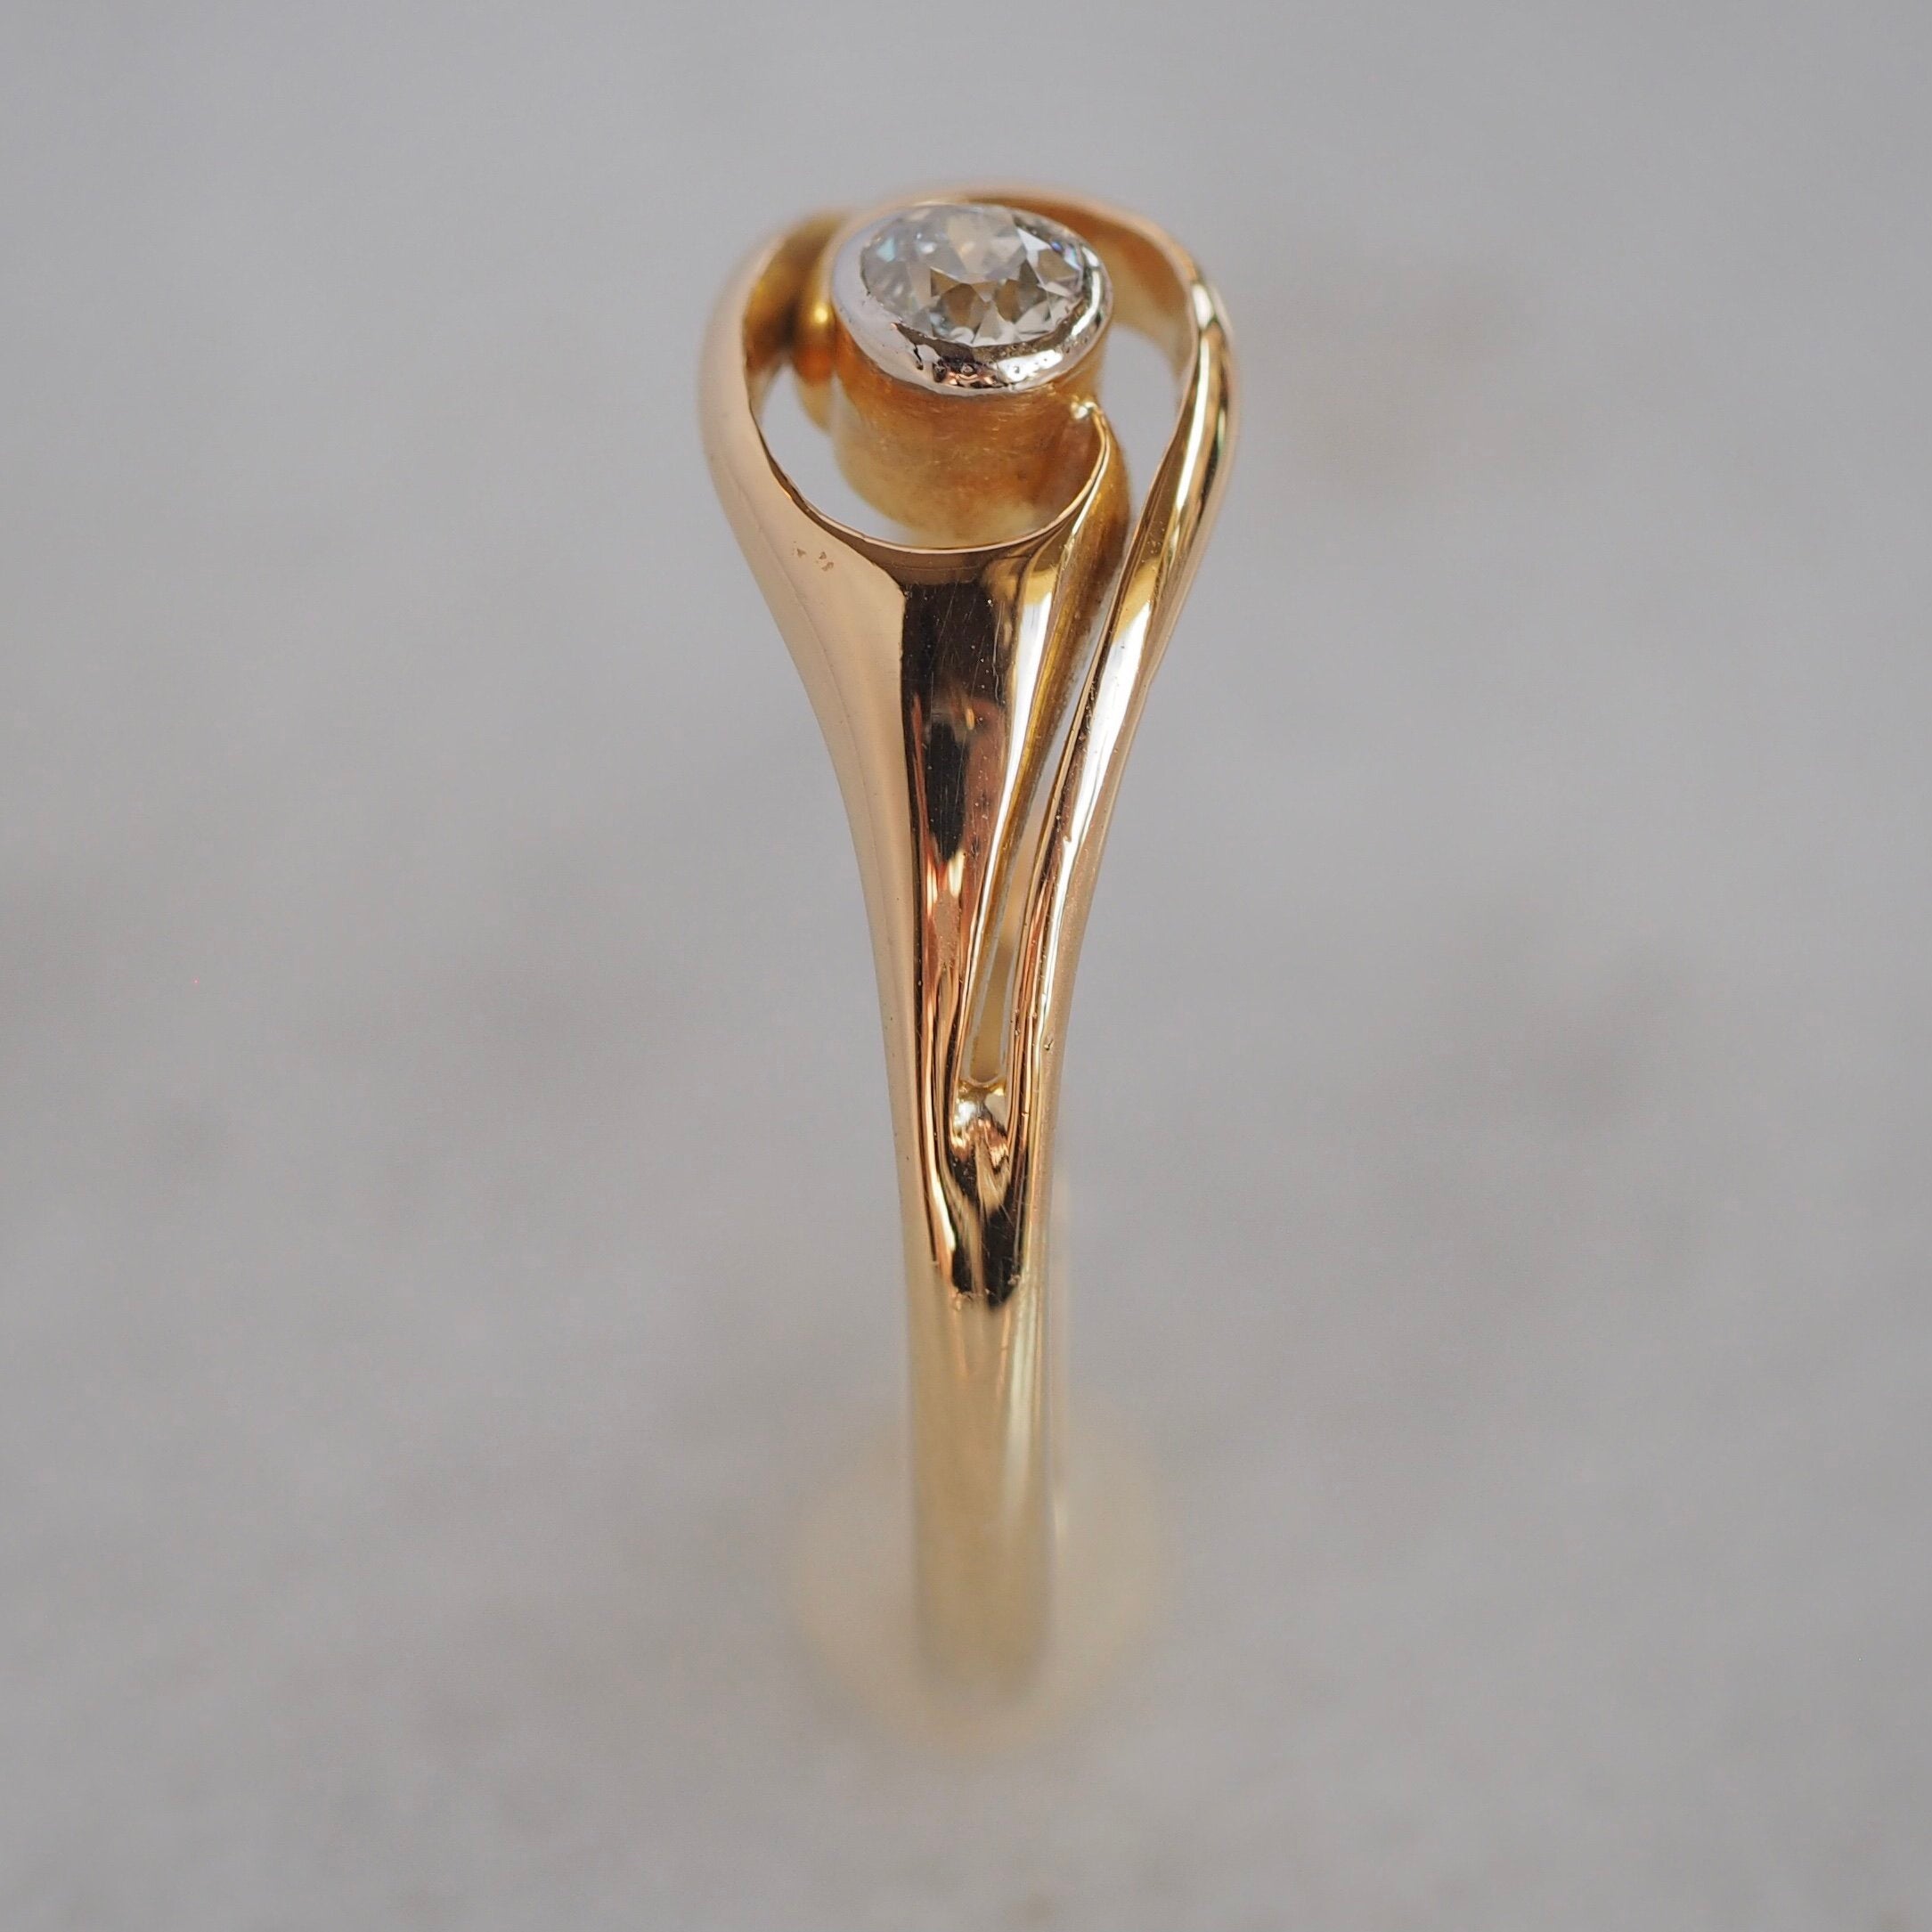 Vintage 18k Gold and Diamond Edwardian Inspired Ring